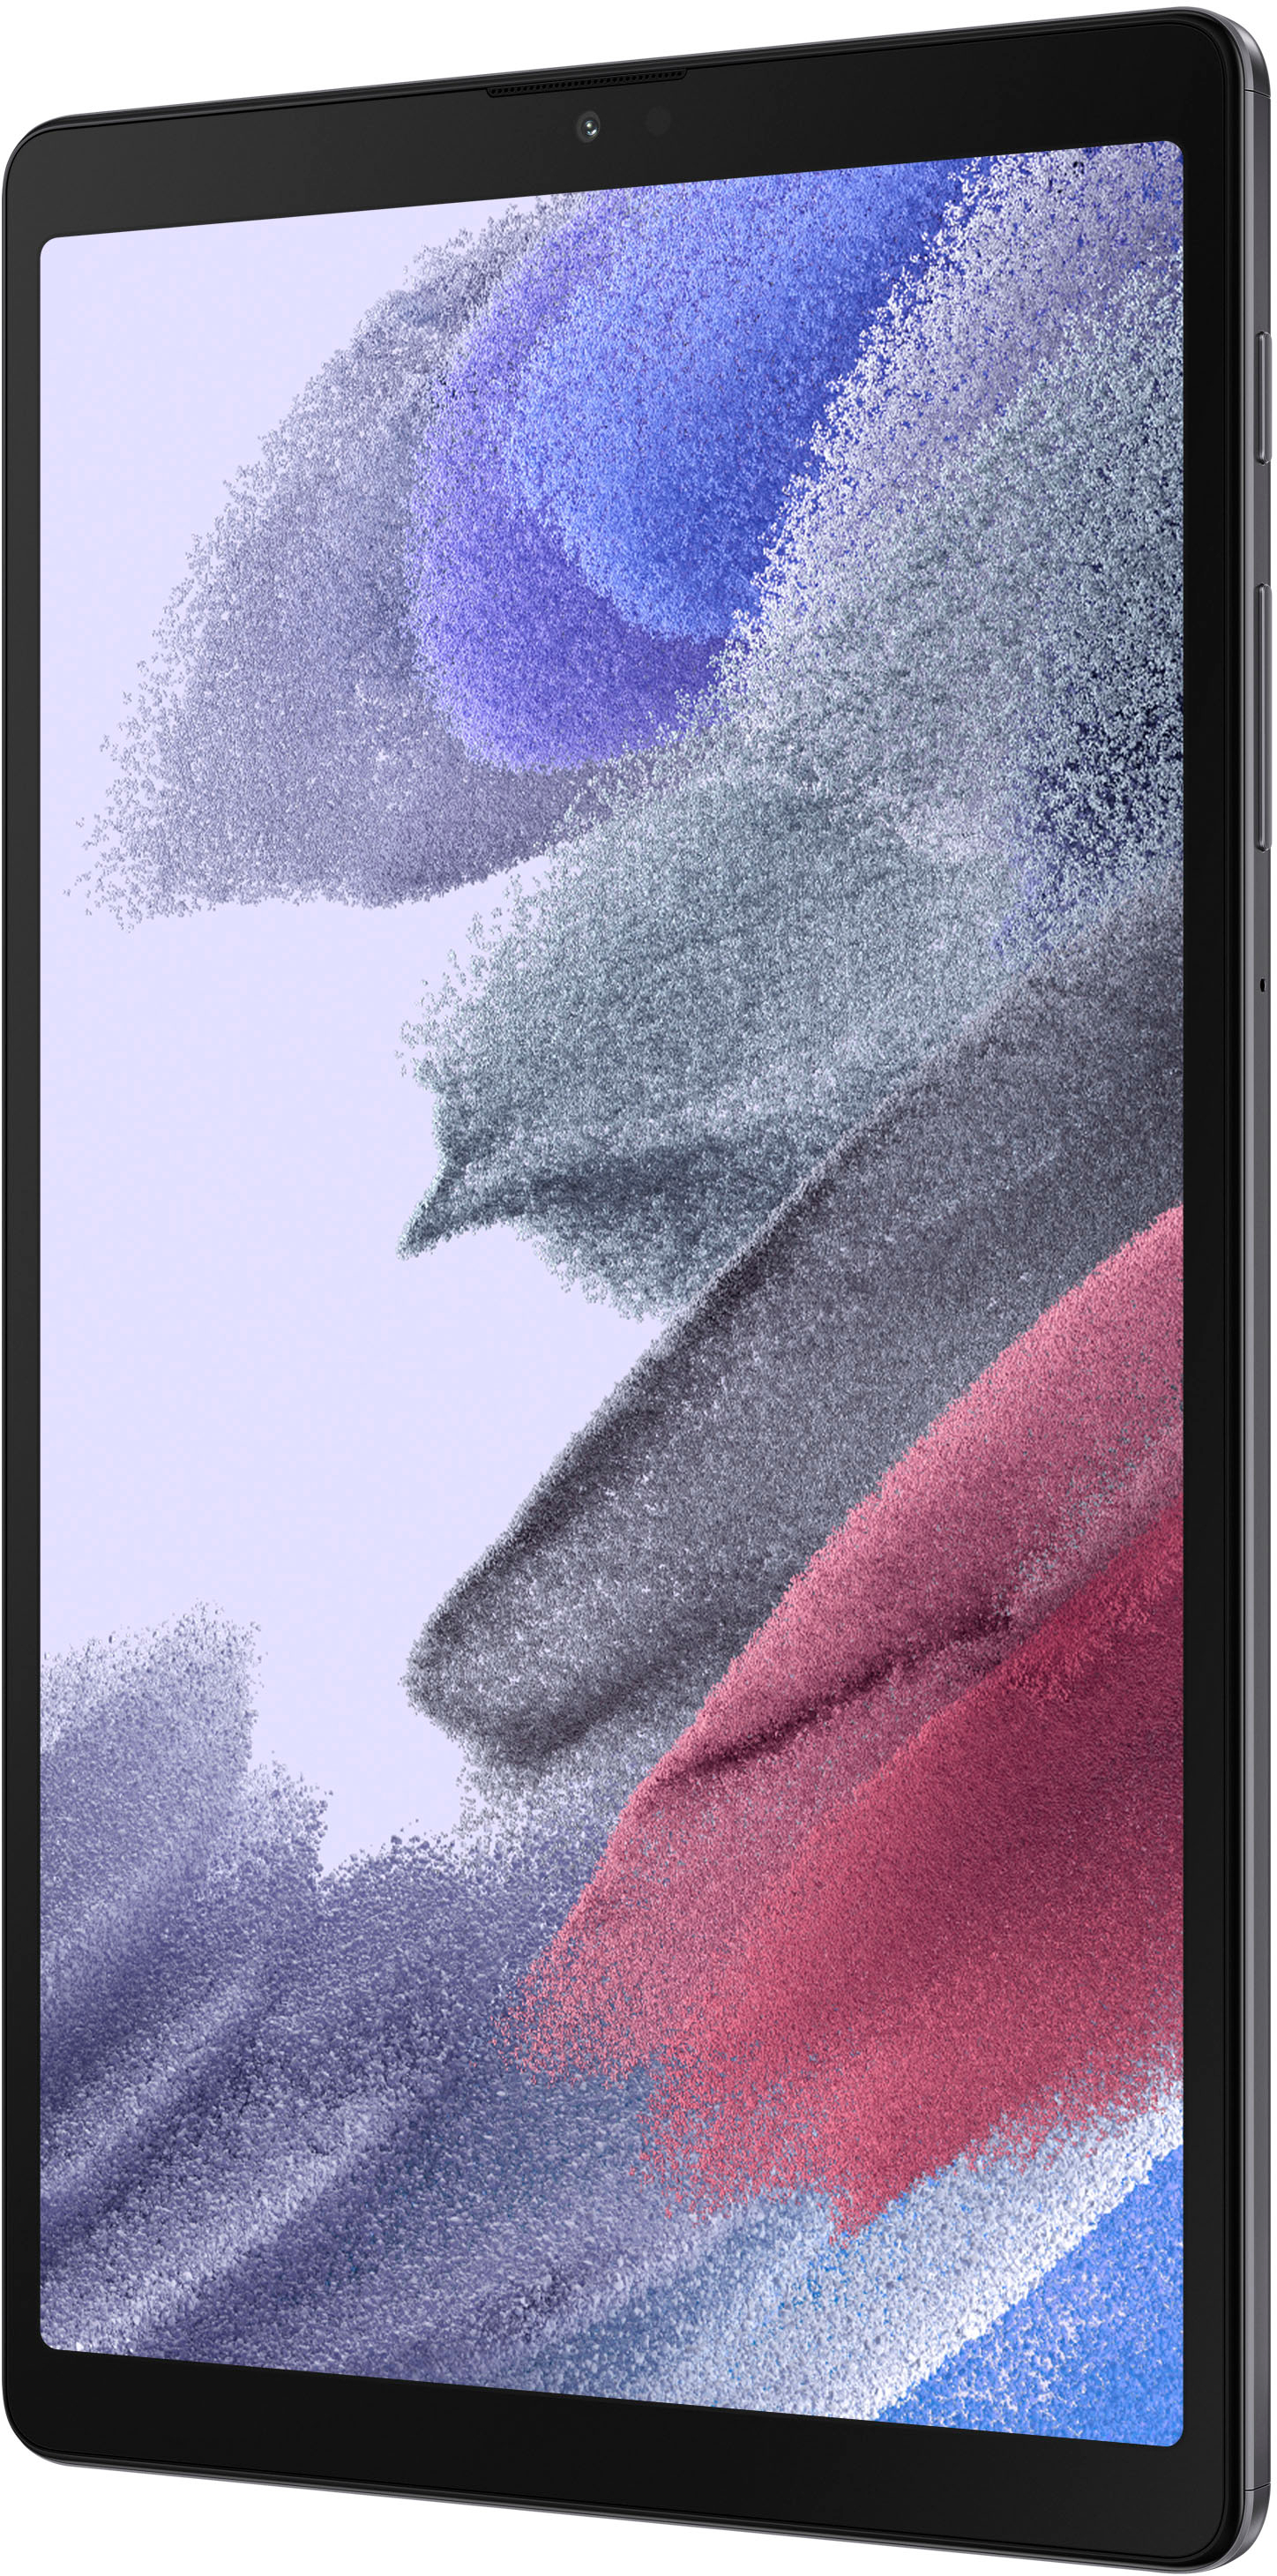  SAMSUNG Galaxy Tab A7 Lite 8.7 32GB WiFi Android